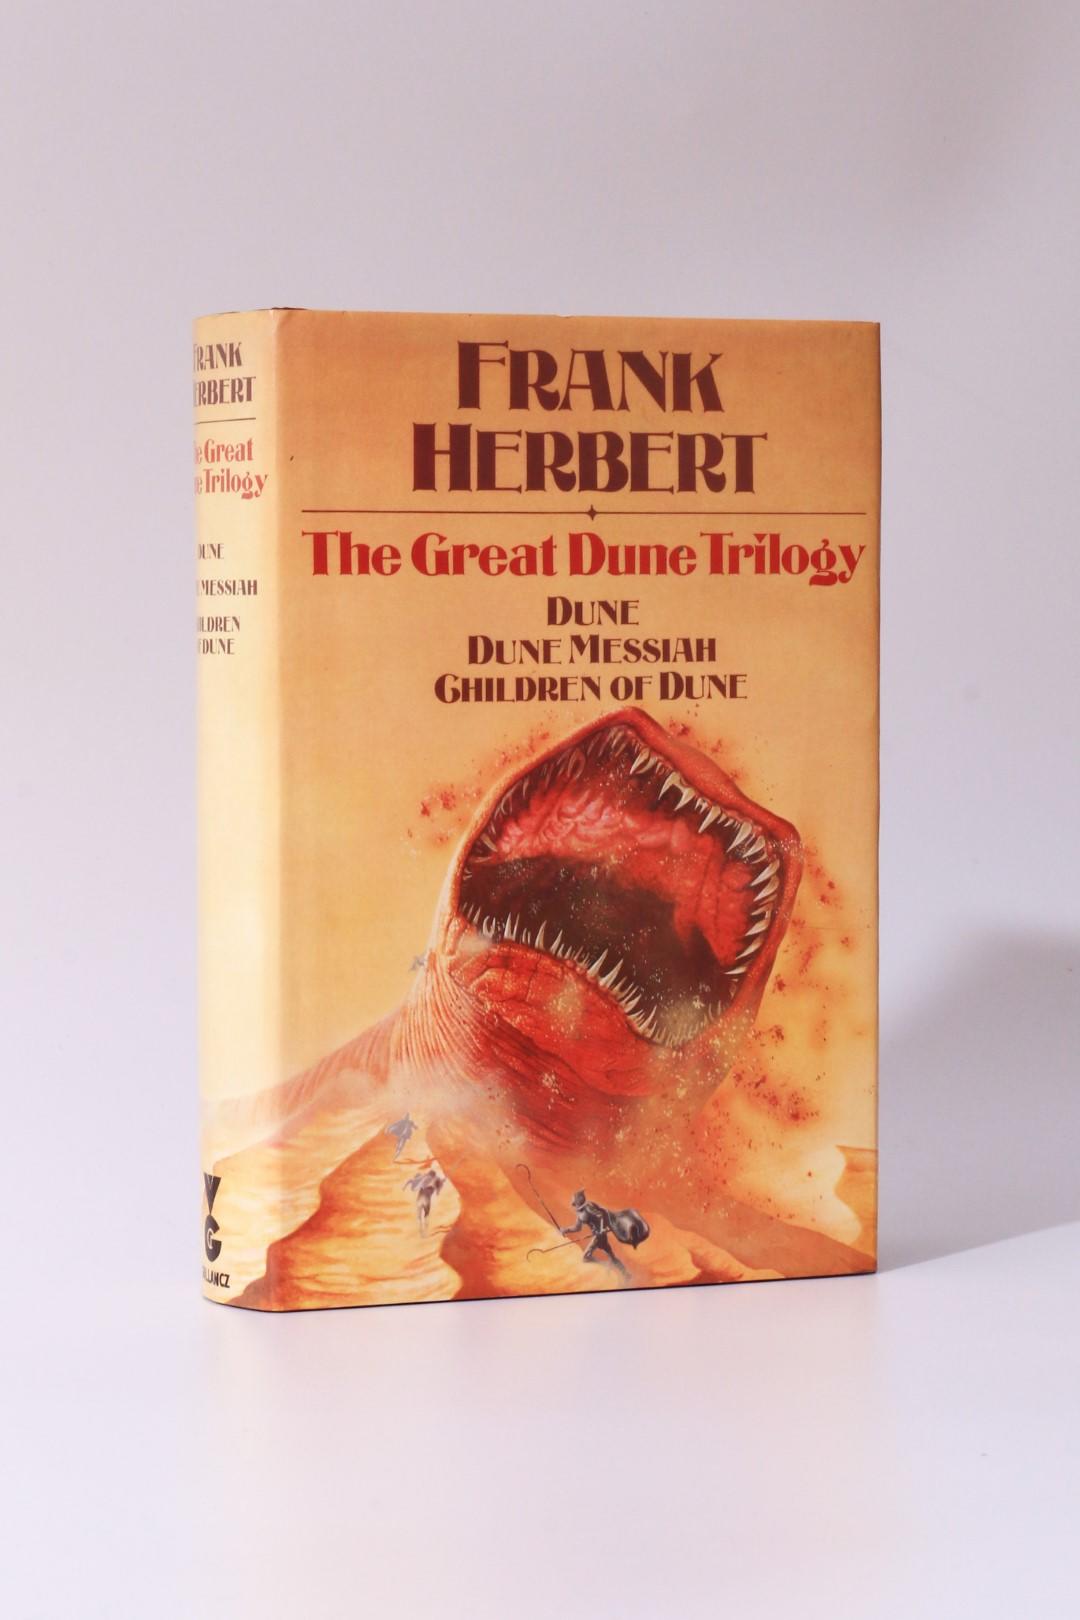 Frank Herbert - The Great Dune Trilogy: Dune, Dune Messiah, Children of Dune - Gollancz, 1979, First Thus.